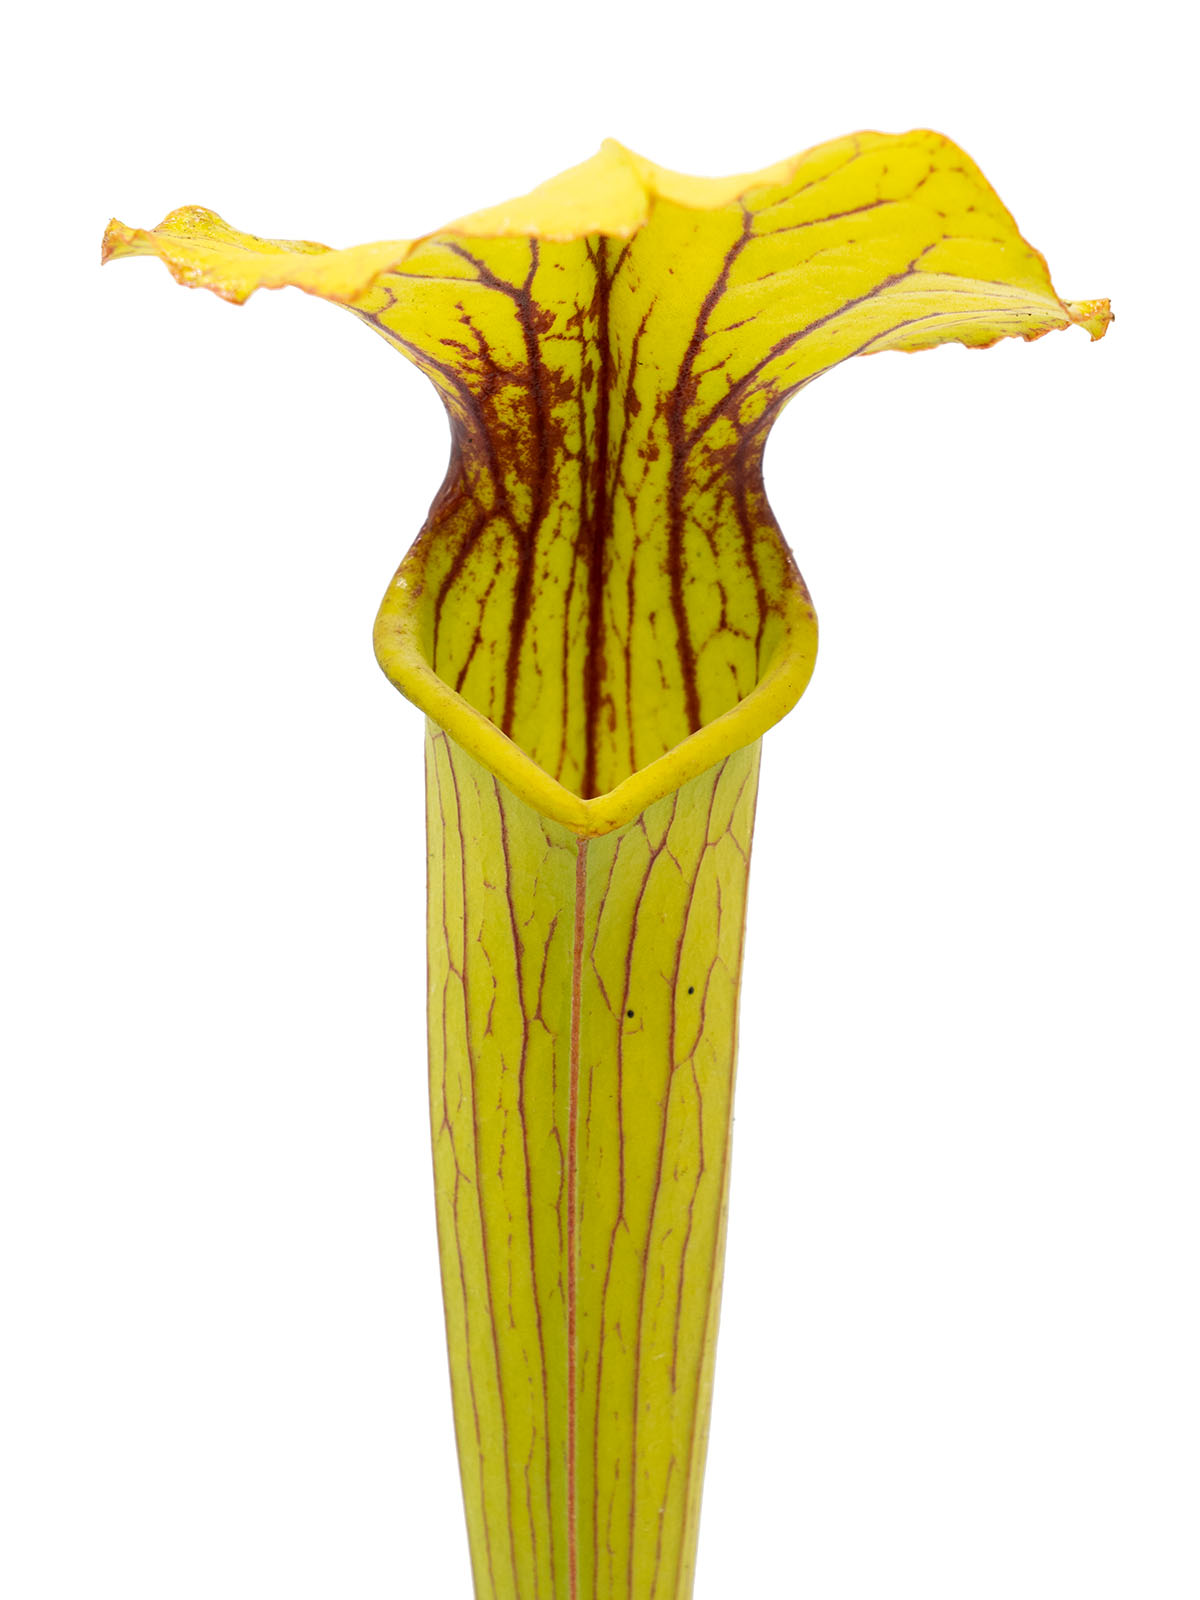 Sarracenia alata x flava var. maxima - Insektenfang IPx55